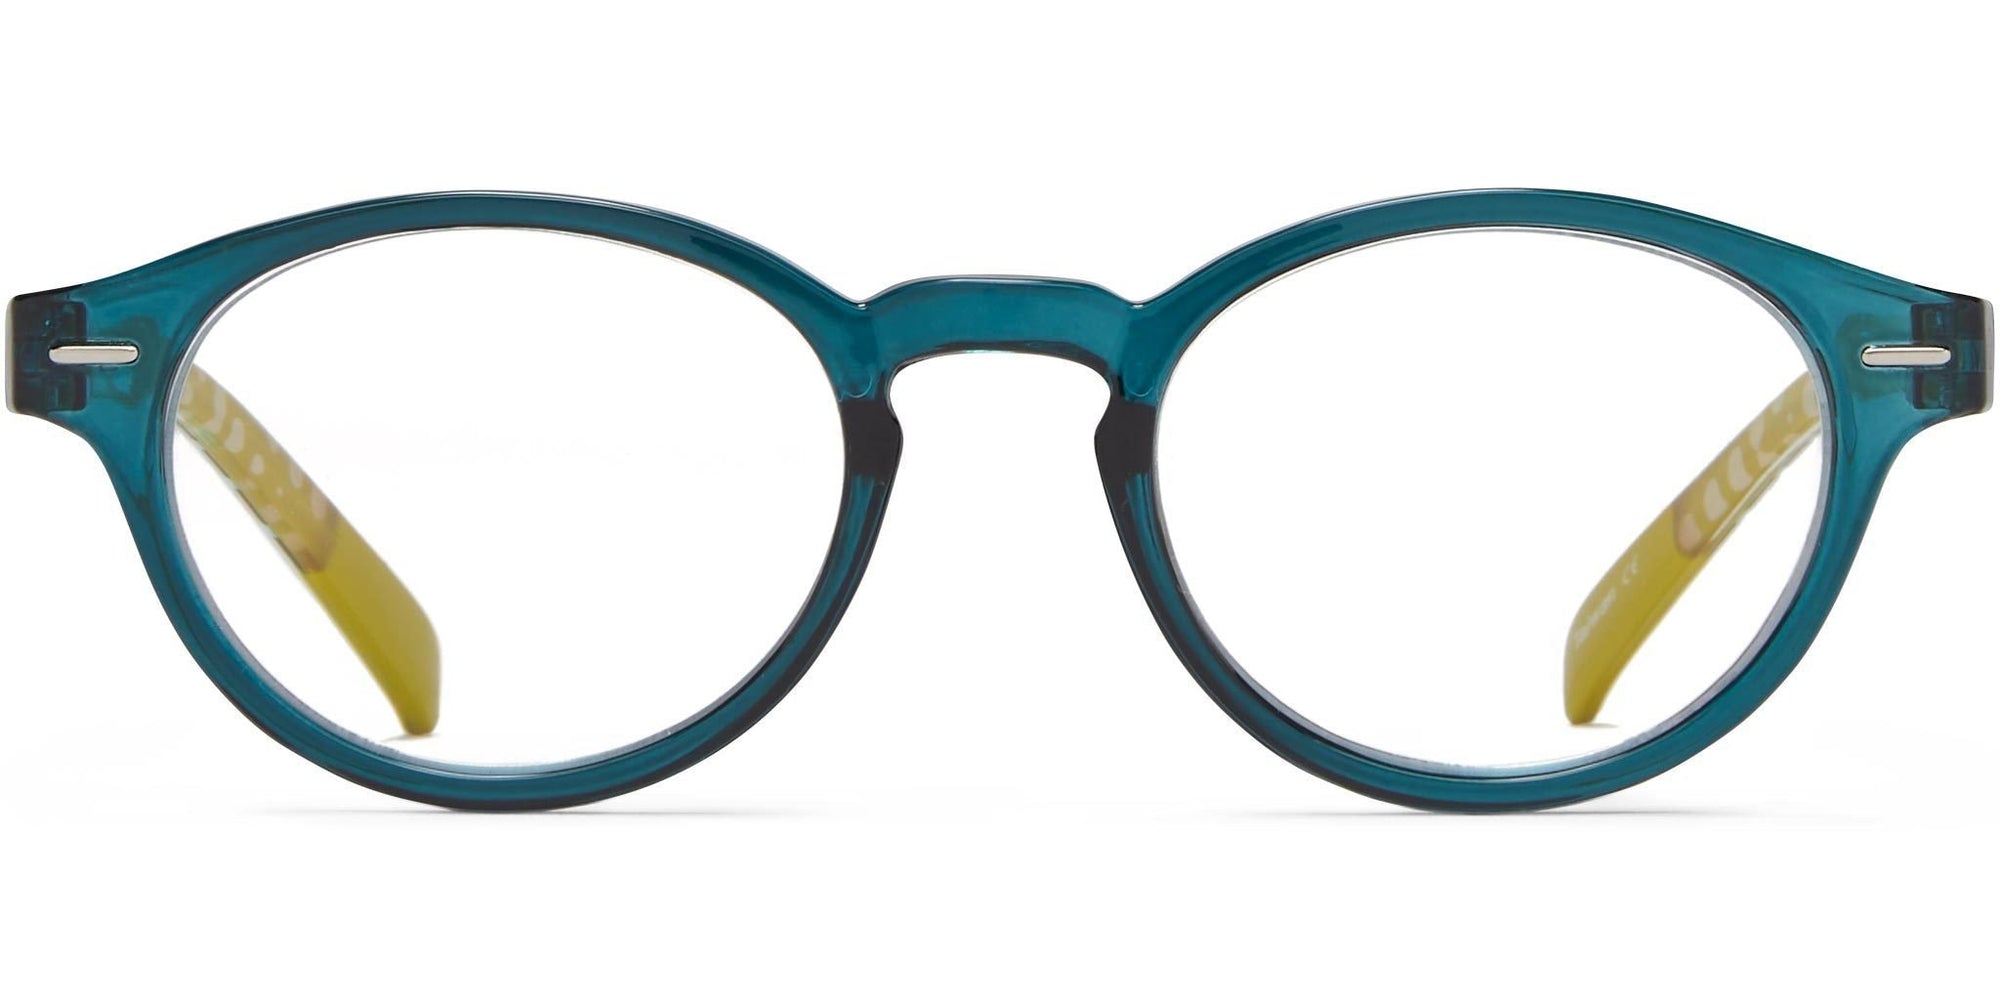 Dalton - Teal/Green/Blue / 1.25 - Reading Glasses